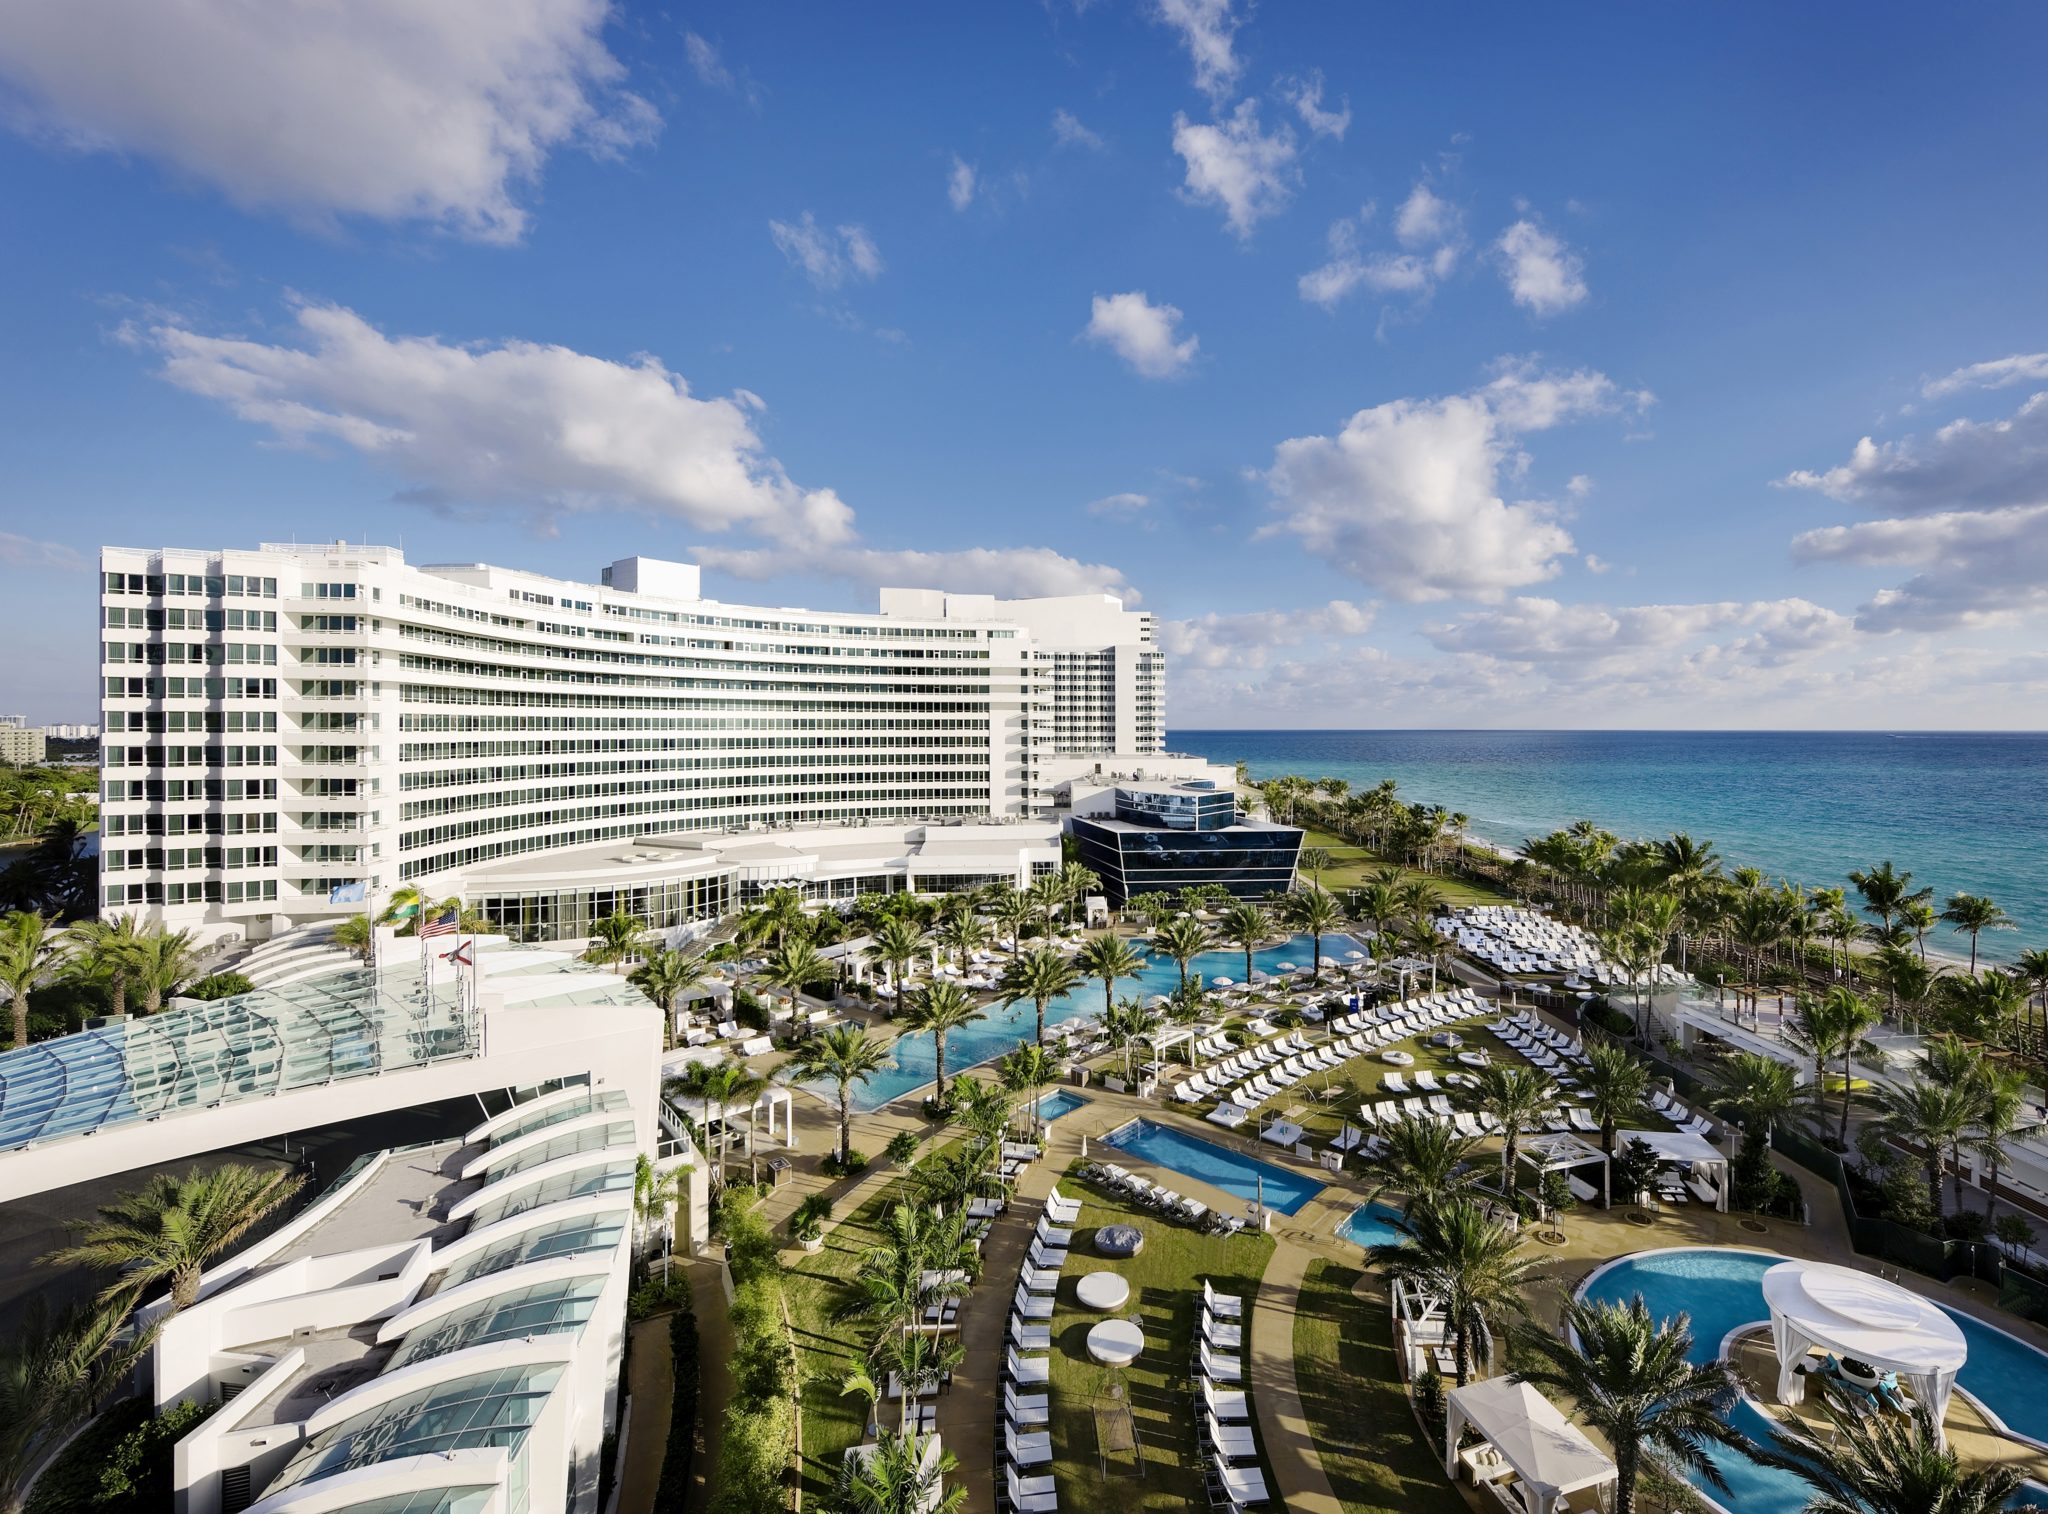 Fontainebleau Miami Beach Plans Big Expansion, Connected By Bridge